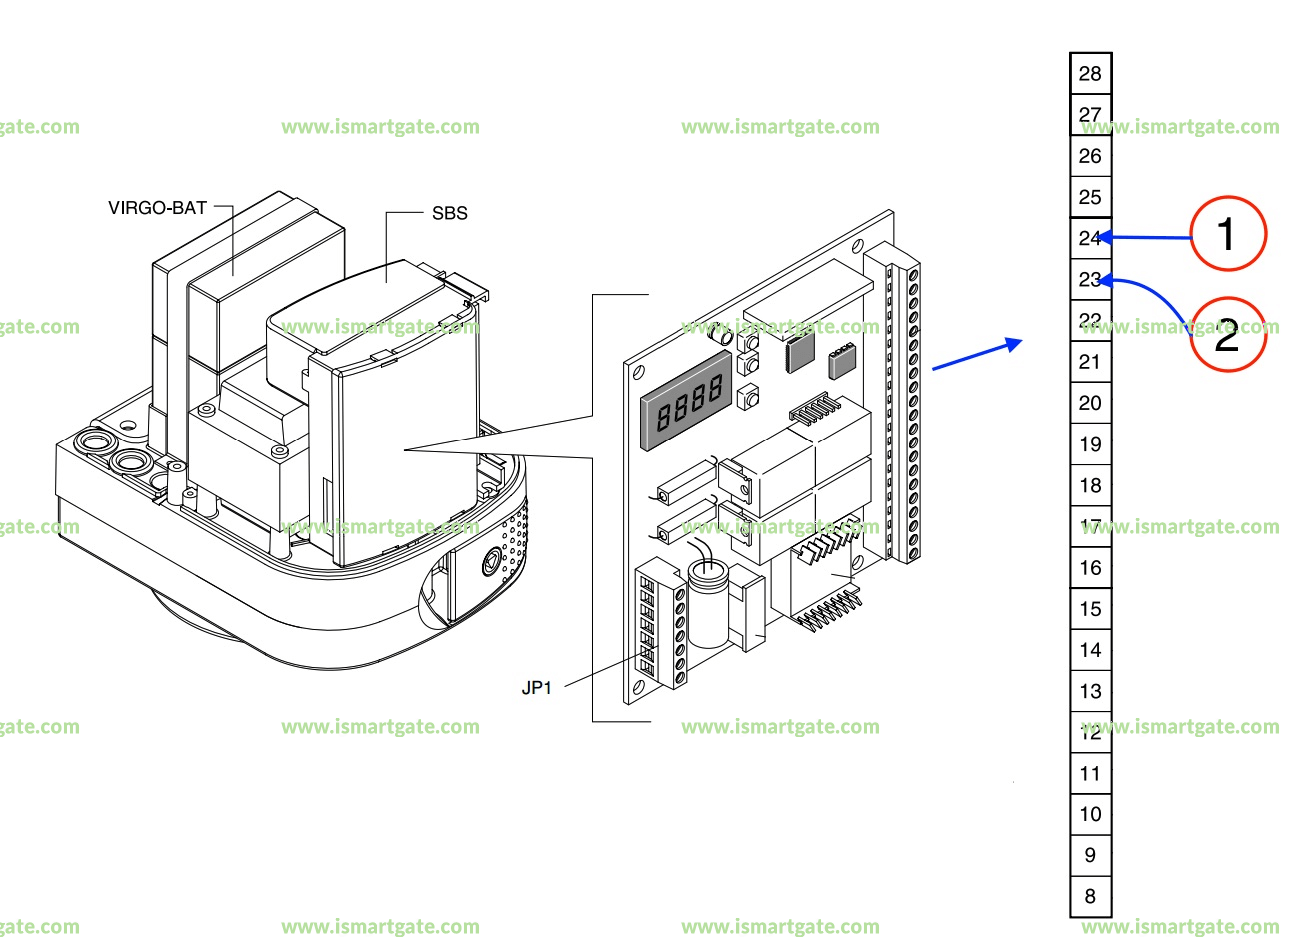 Wiring diagram for BFT VIRGO